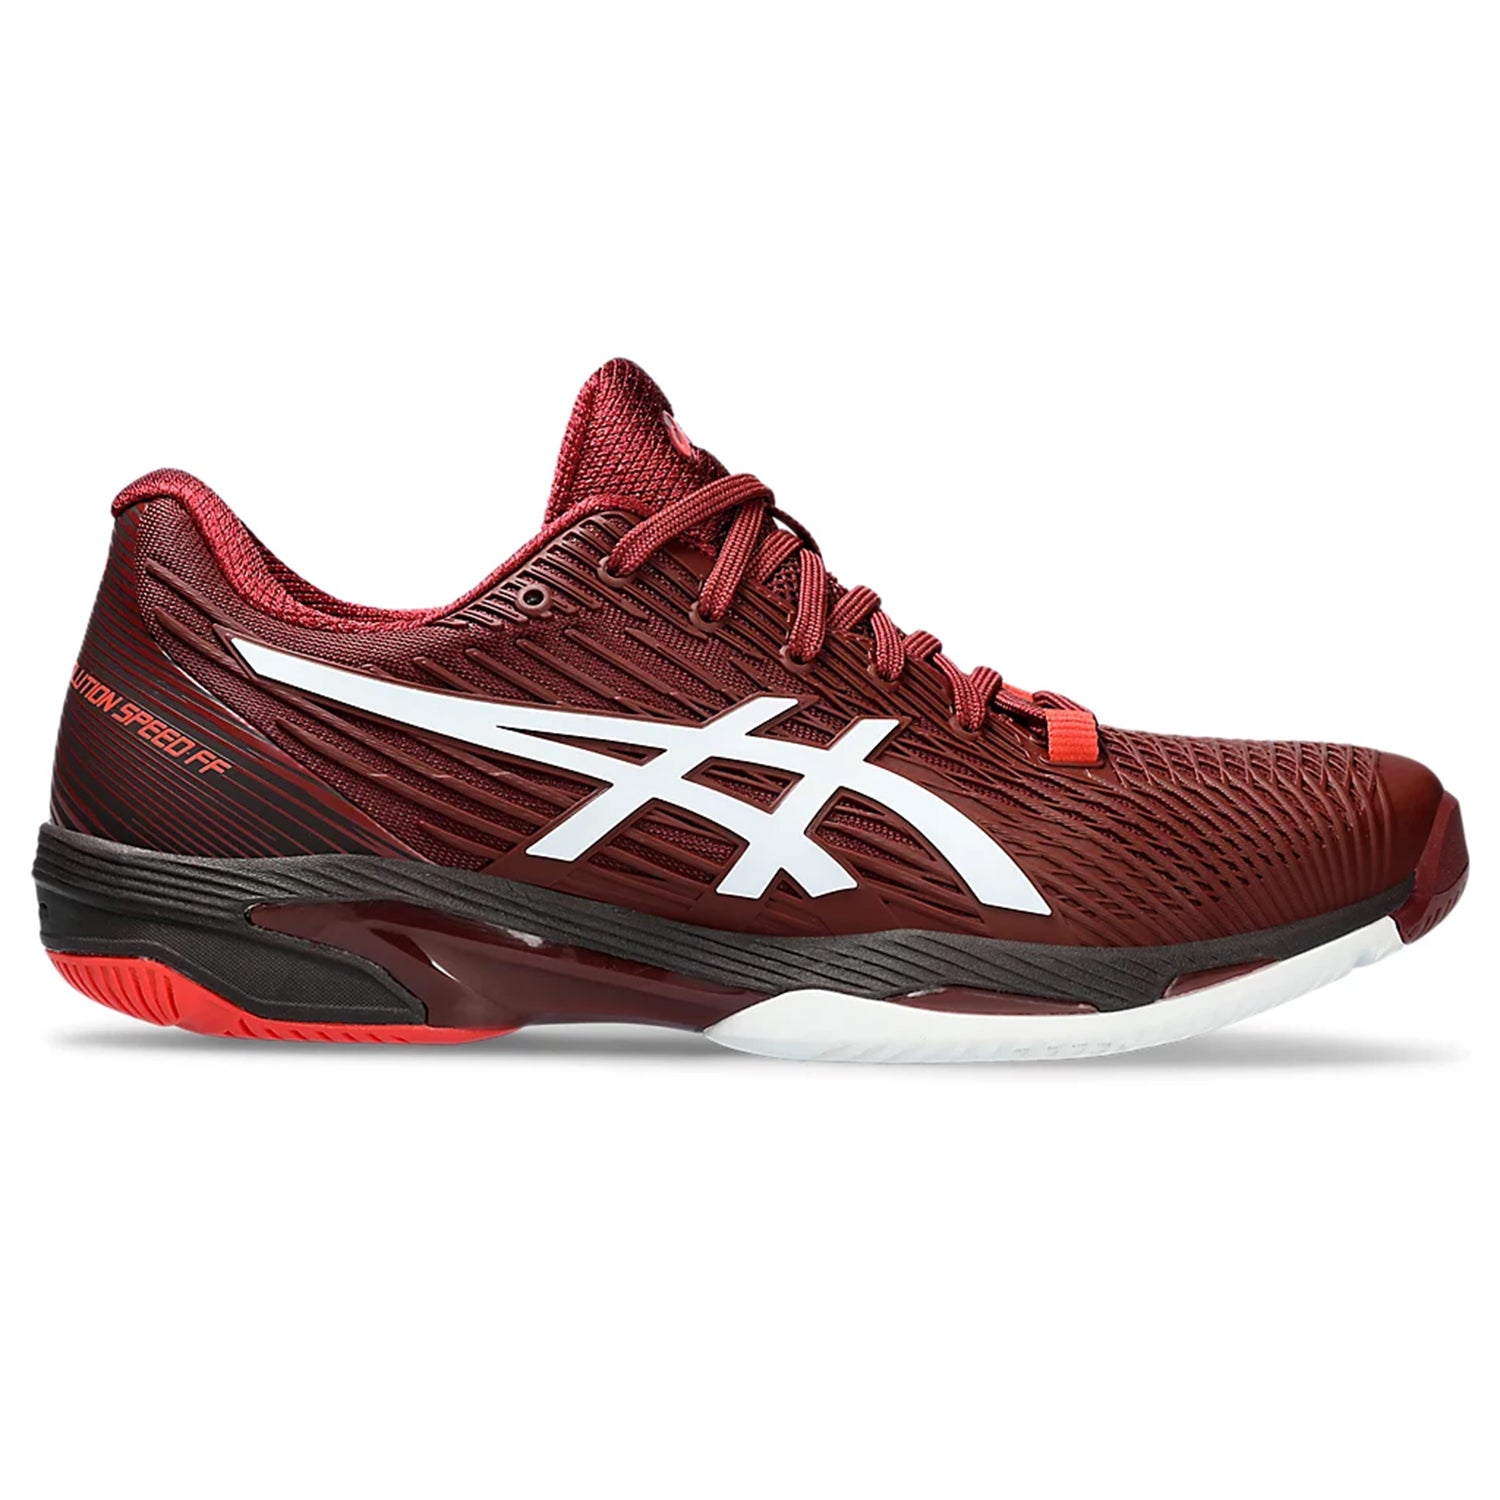 Asics Solution Speed FF 2 Men's Tennis Shoes - Antique Red/White - Best Price online Prokicksports.com